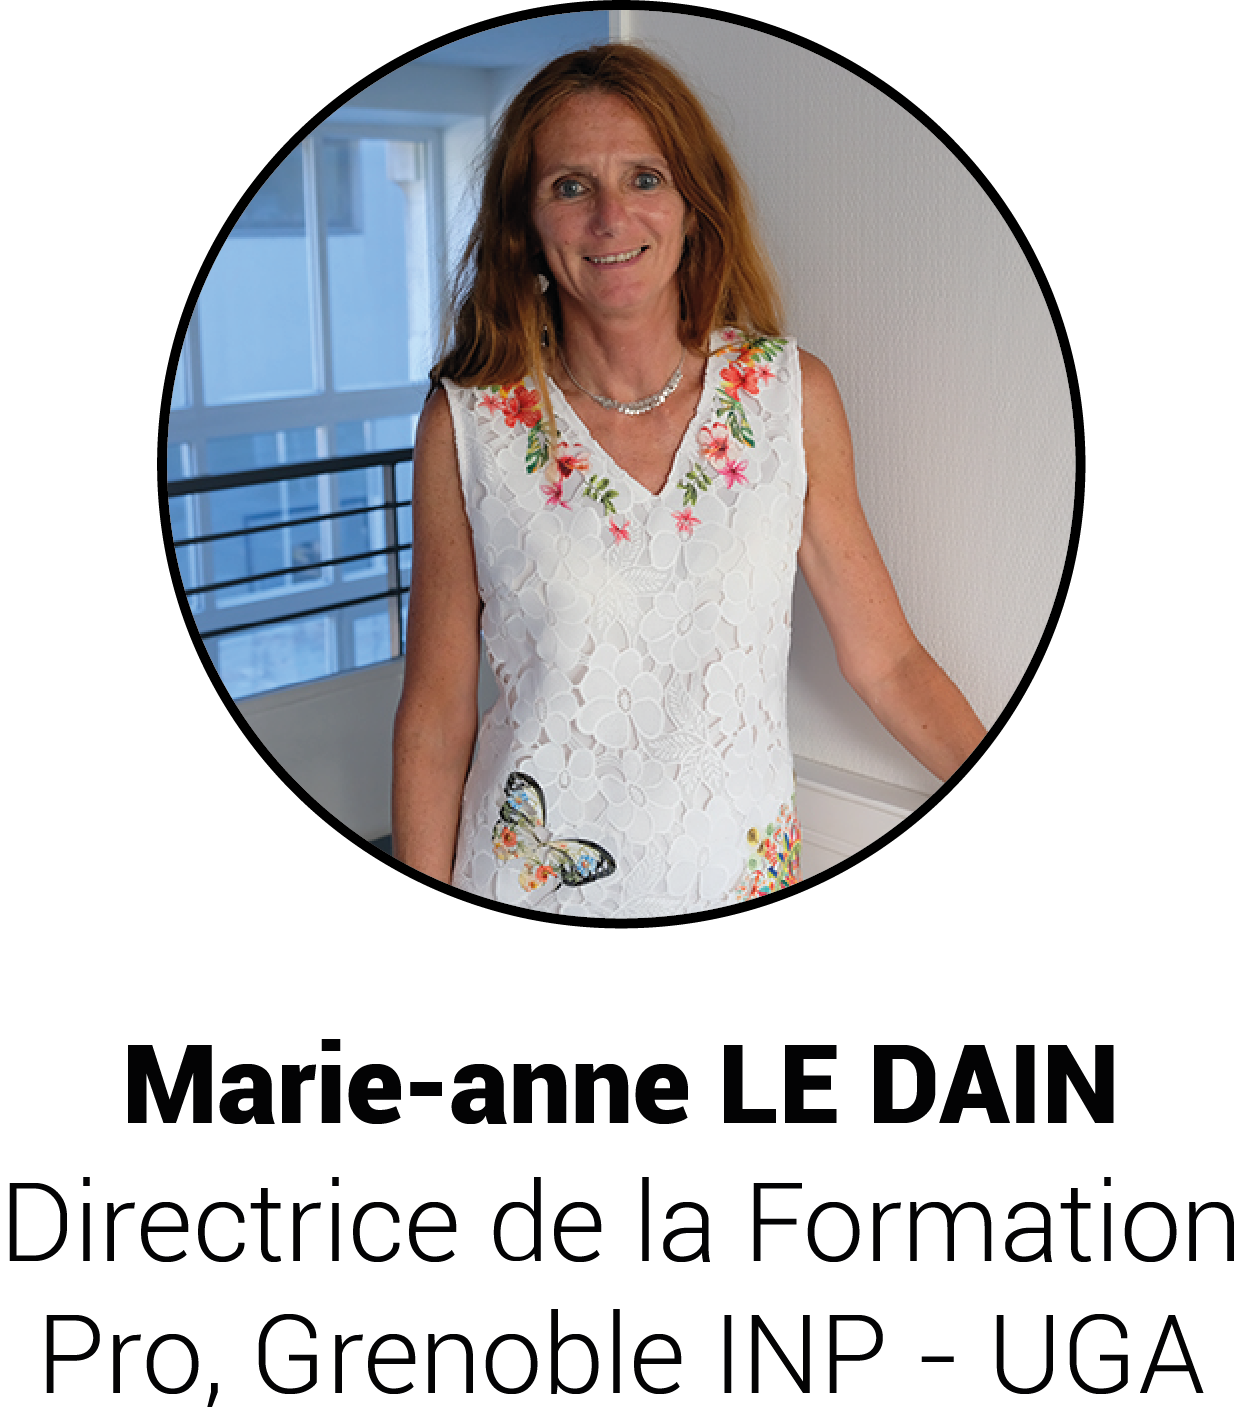 Marie-anne LE DAIN - Directrice de la Formation Pro, Grenoble INP - UGA